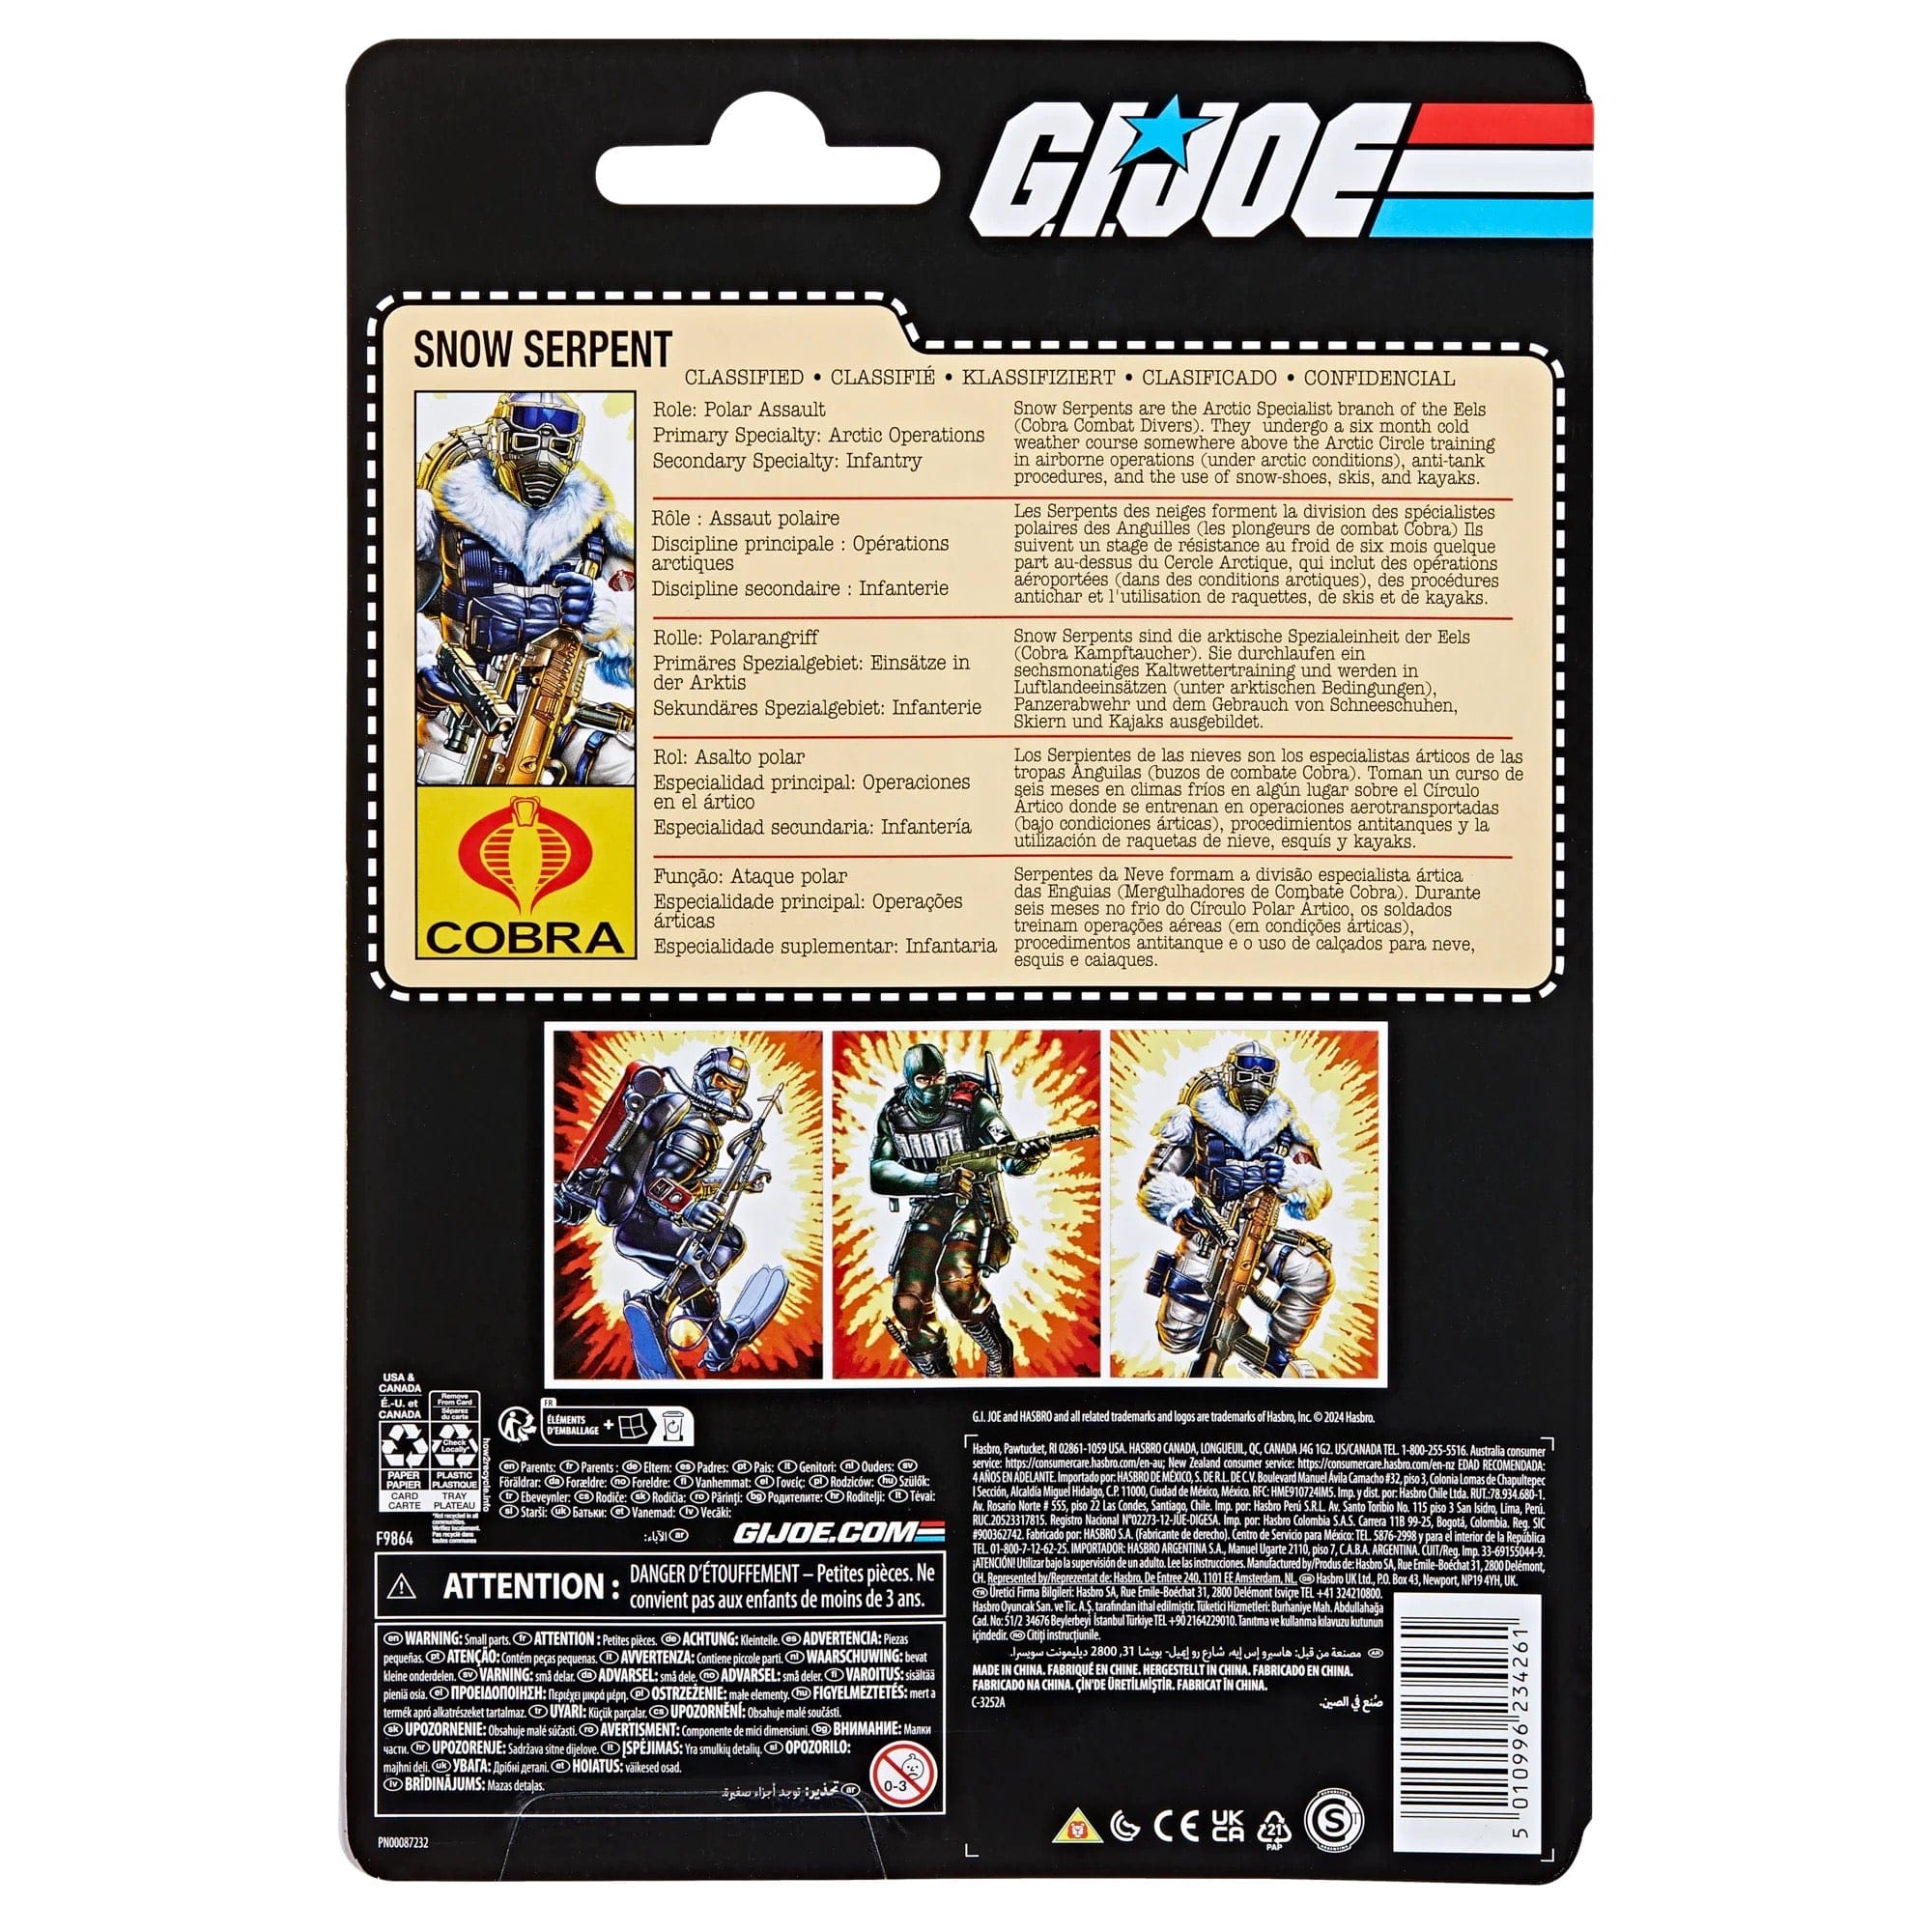 Hasbro G.I. Joe Classified Series Retro Cardback Snow Serpent Action Figure